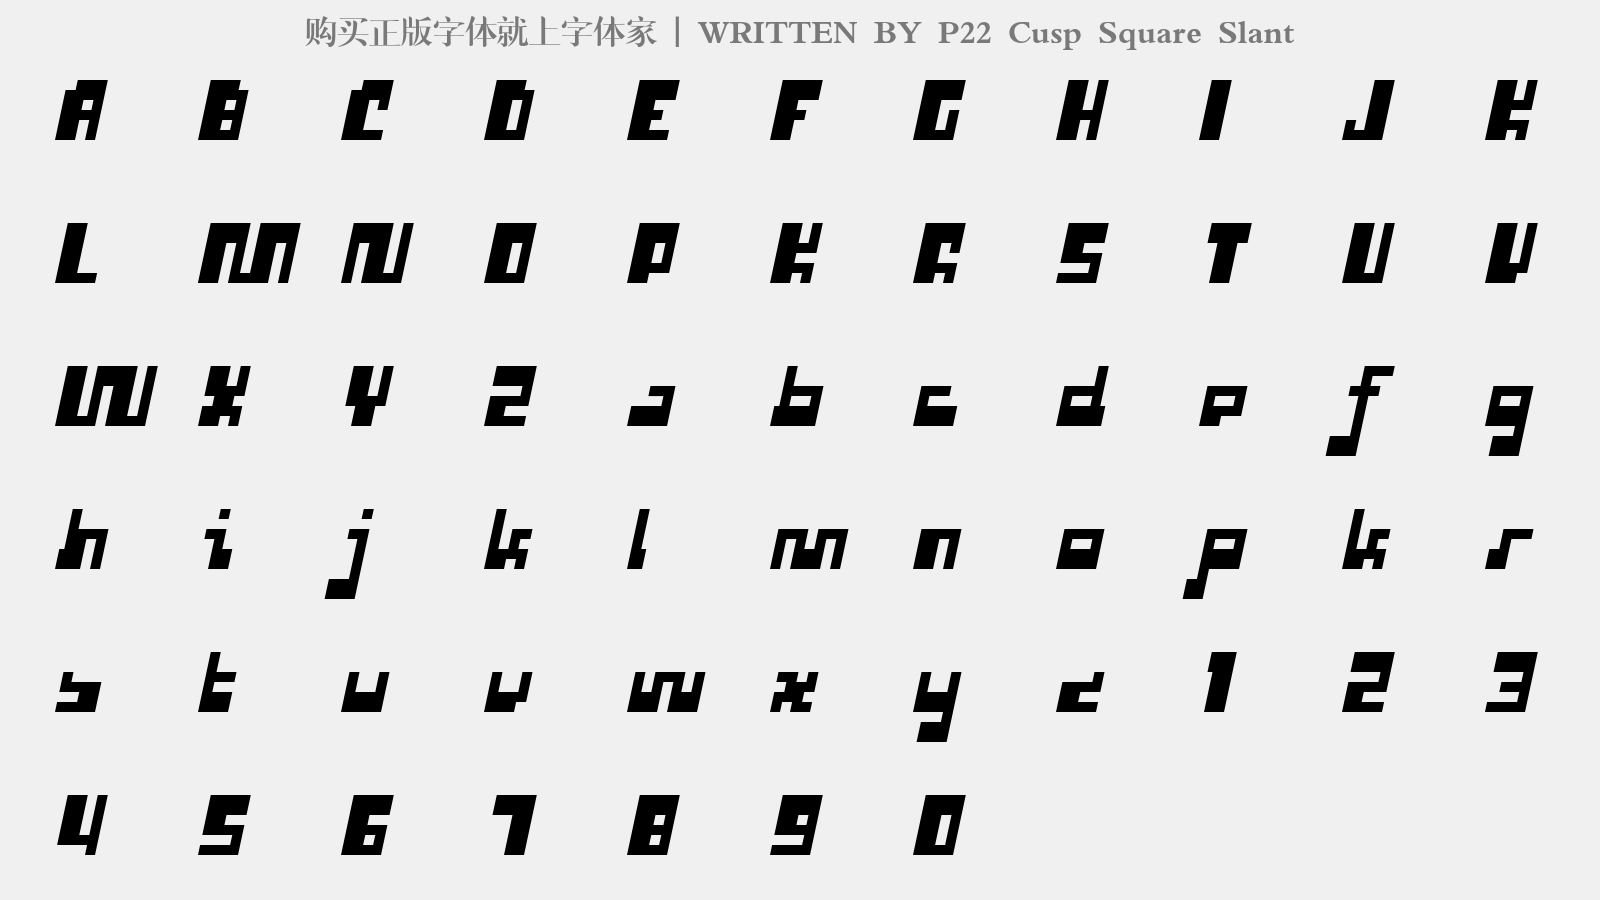 P22 Cusp Square Slant - 大写字母/小写字母/数字